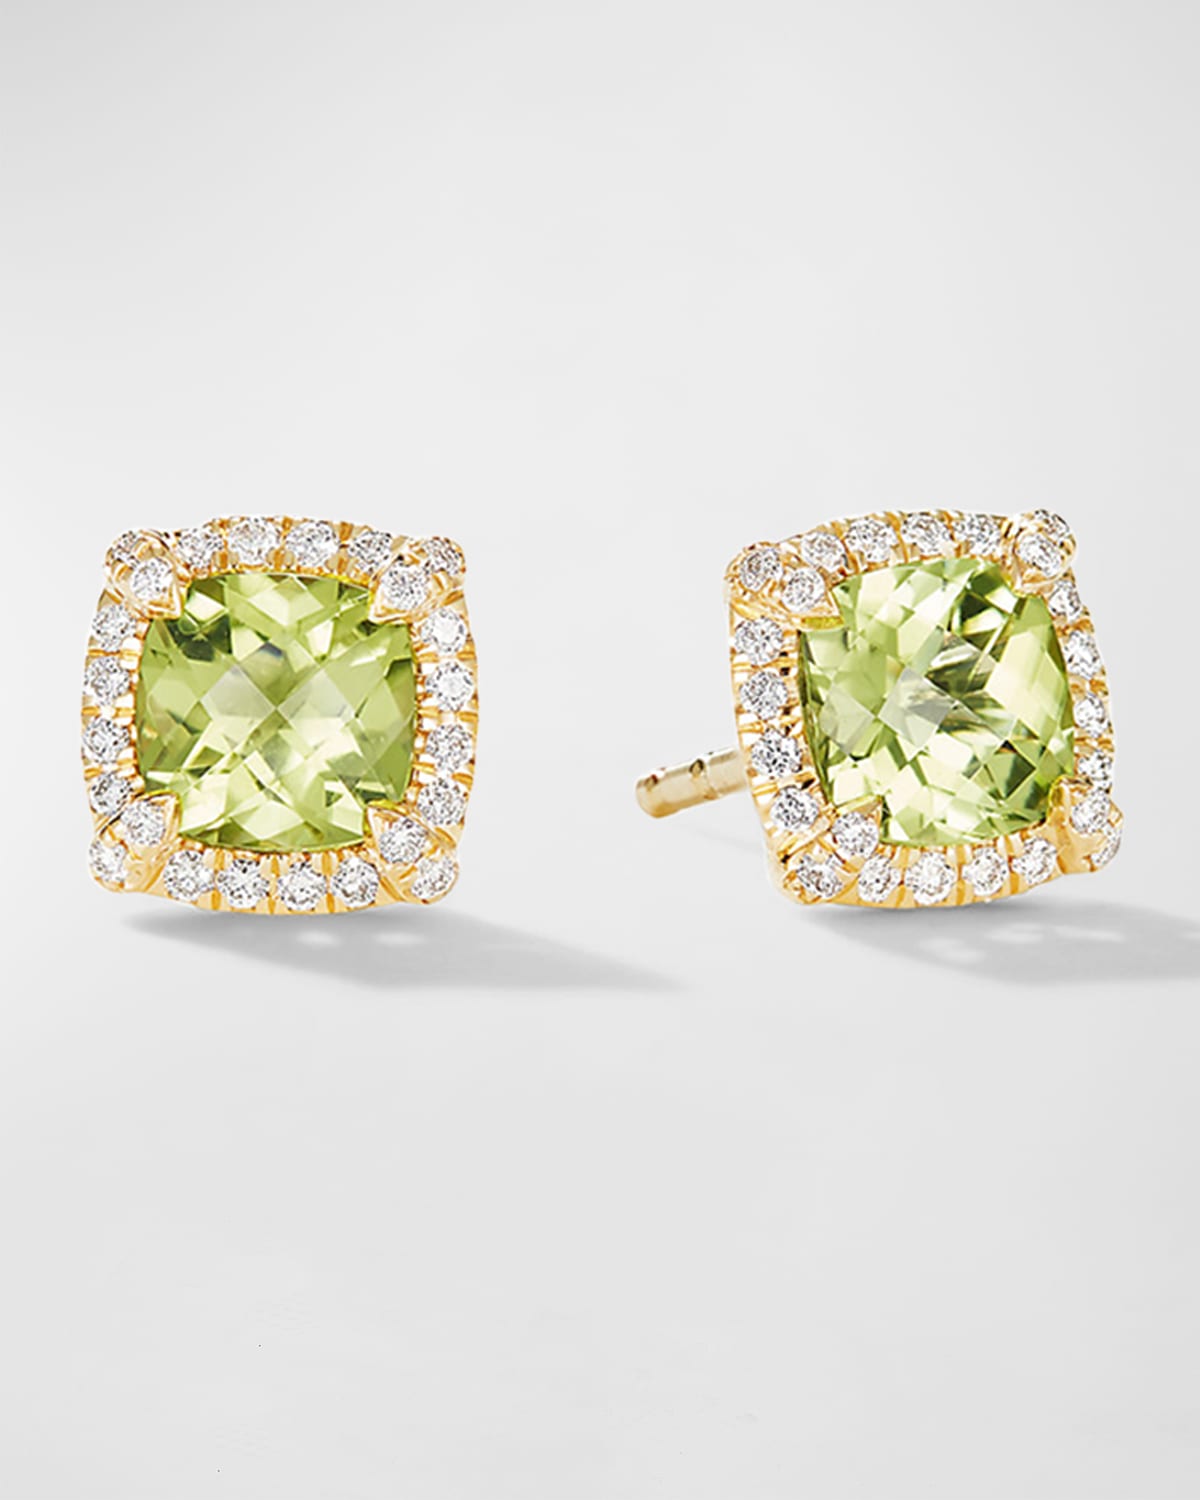 David Yurman Chatelaine Earrings With Gemstone And Diamonds In 18k Gold, 5mm In Peridot